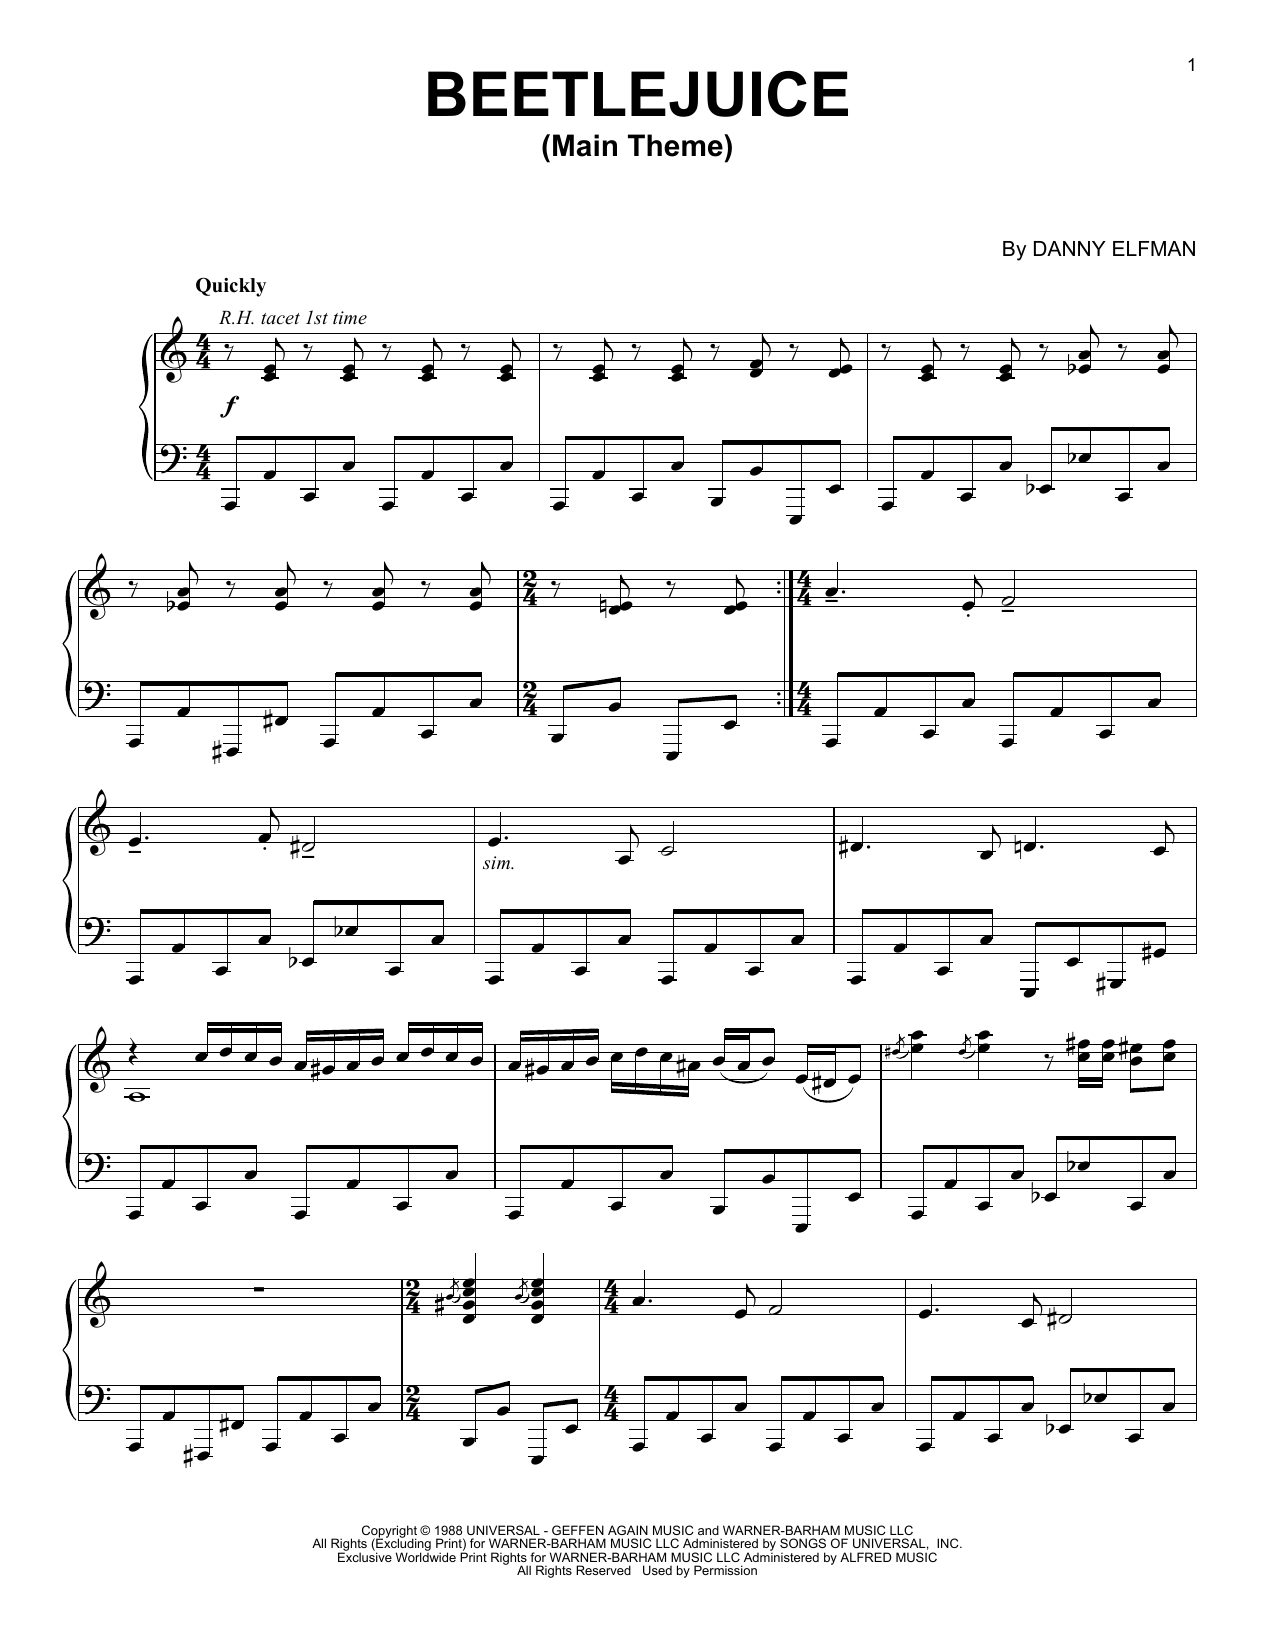 Danny Elfman Beetlejuice Sheet Music Notes & Chords for Beginner Piano - Download or Print PDF